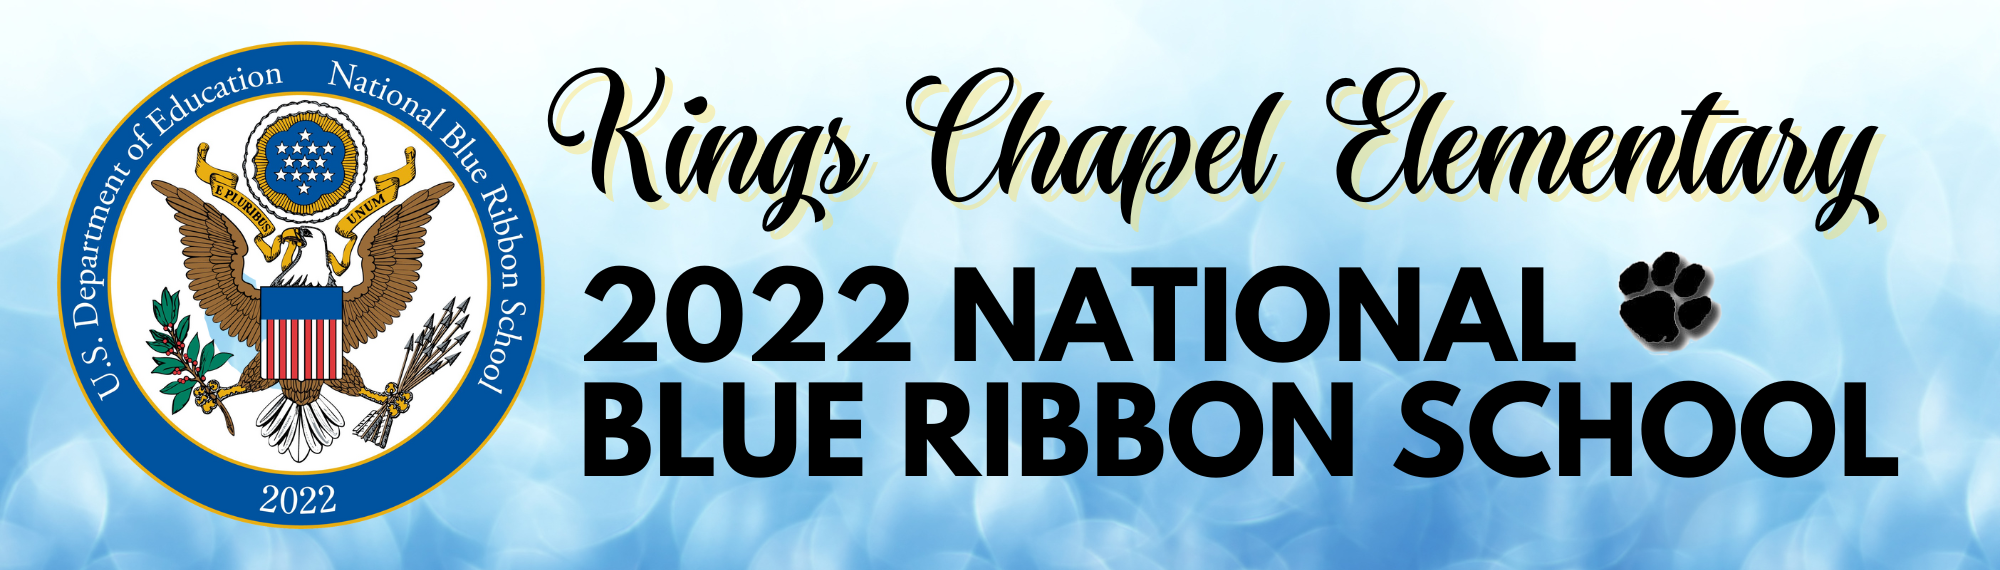 Kings Chapel Elementary - National Blue Ribbon School